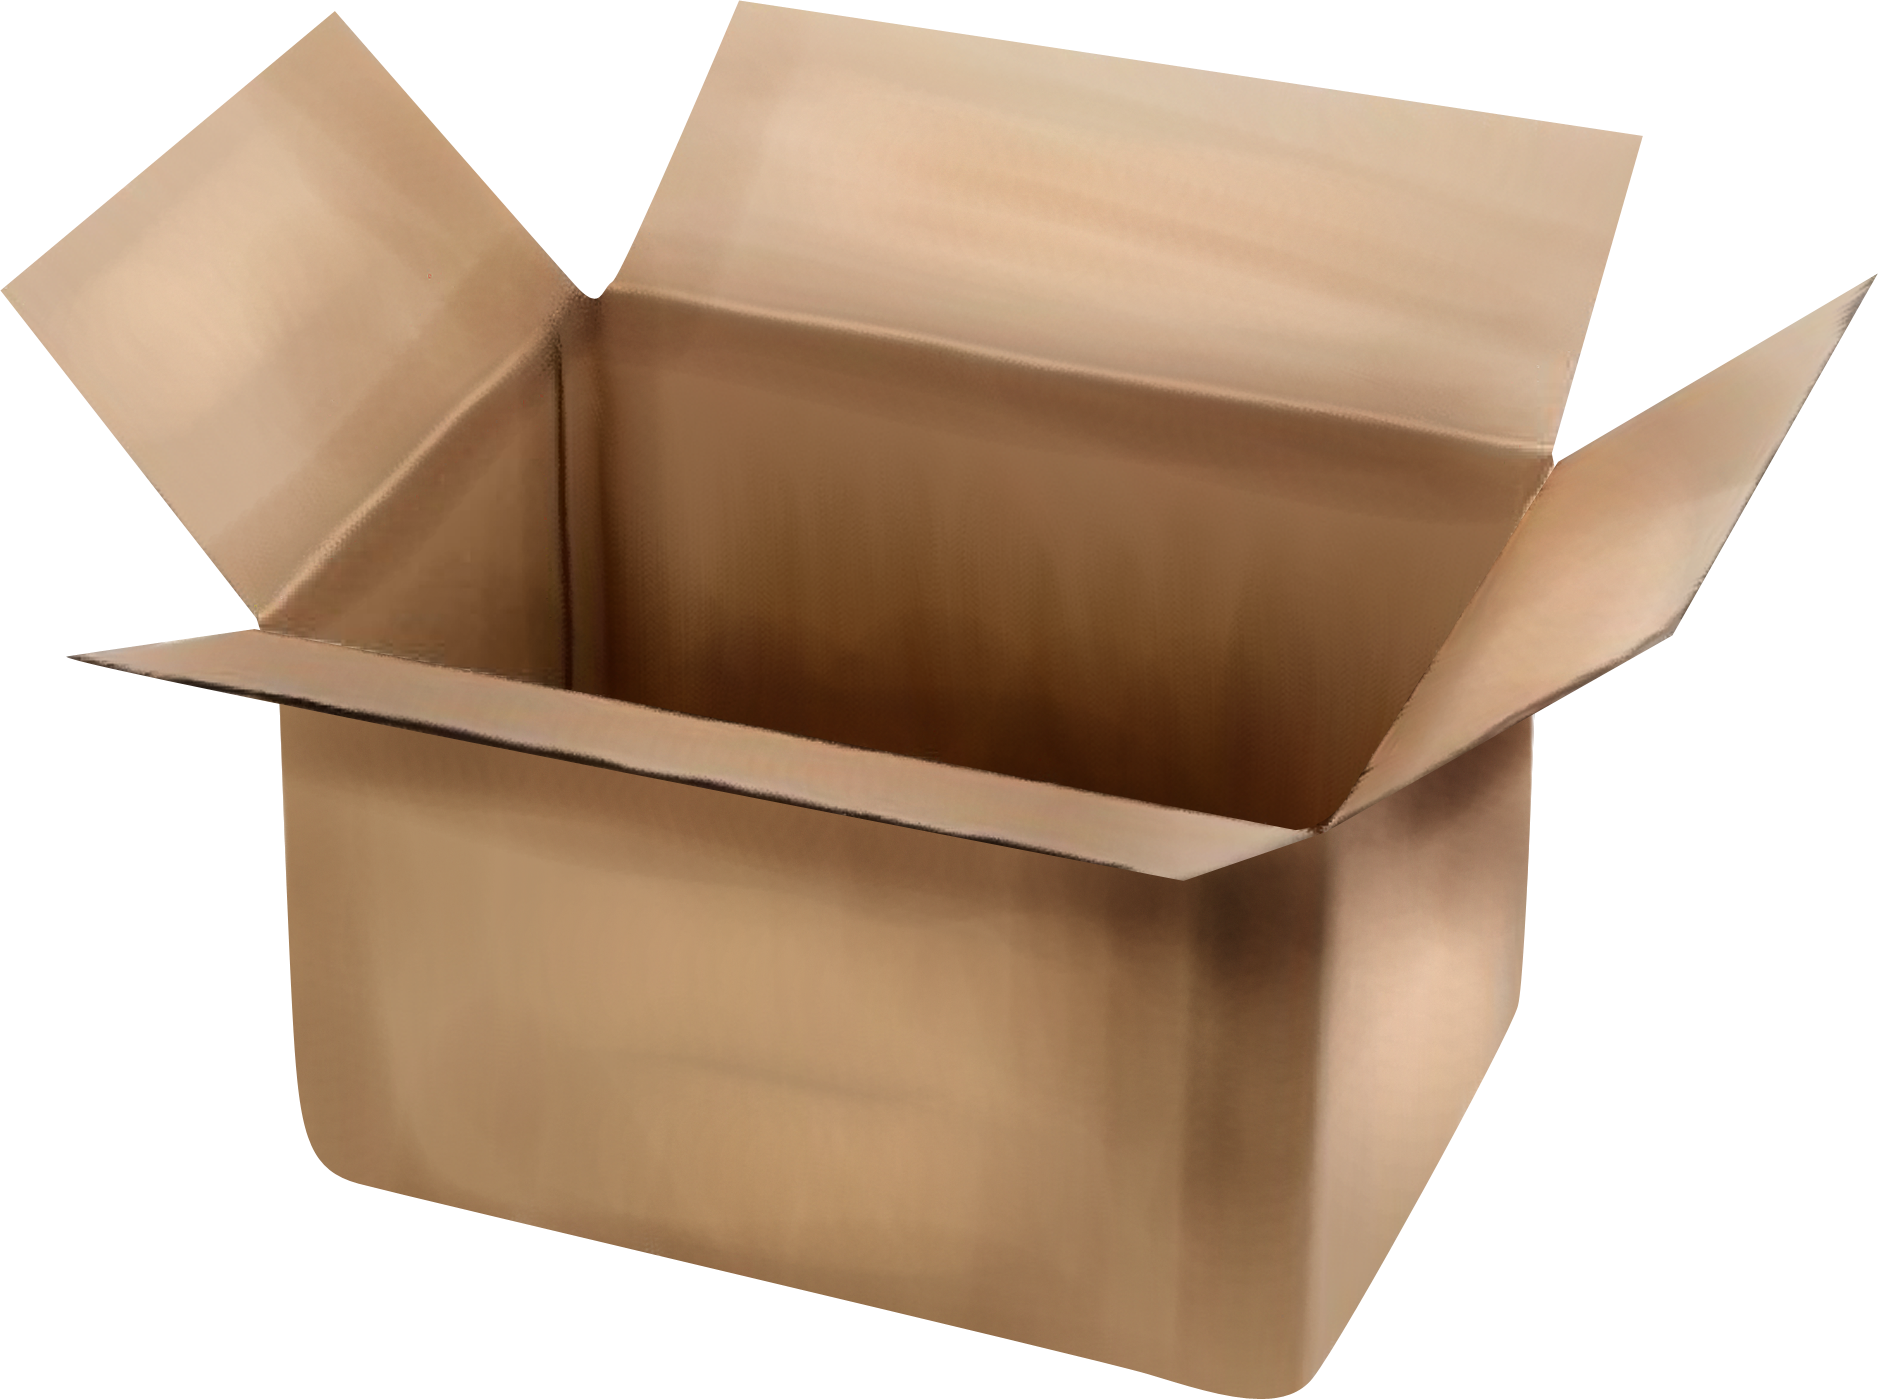 Box. Открытая картонная коробка. Пустые коробки. Картонные коробки на прозрачном фоне. Коробка без фона.